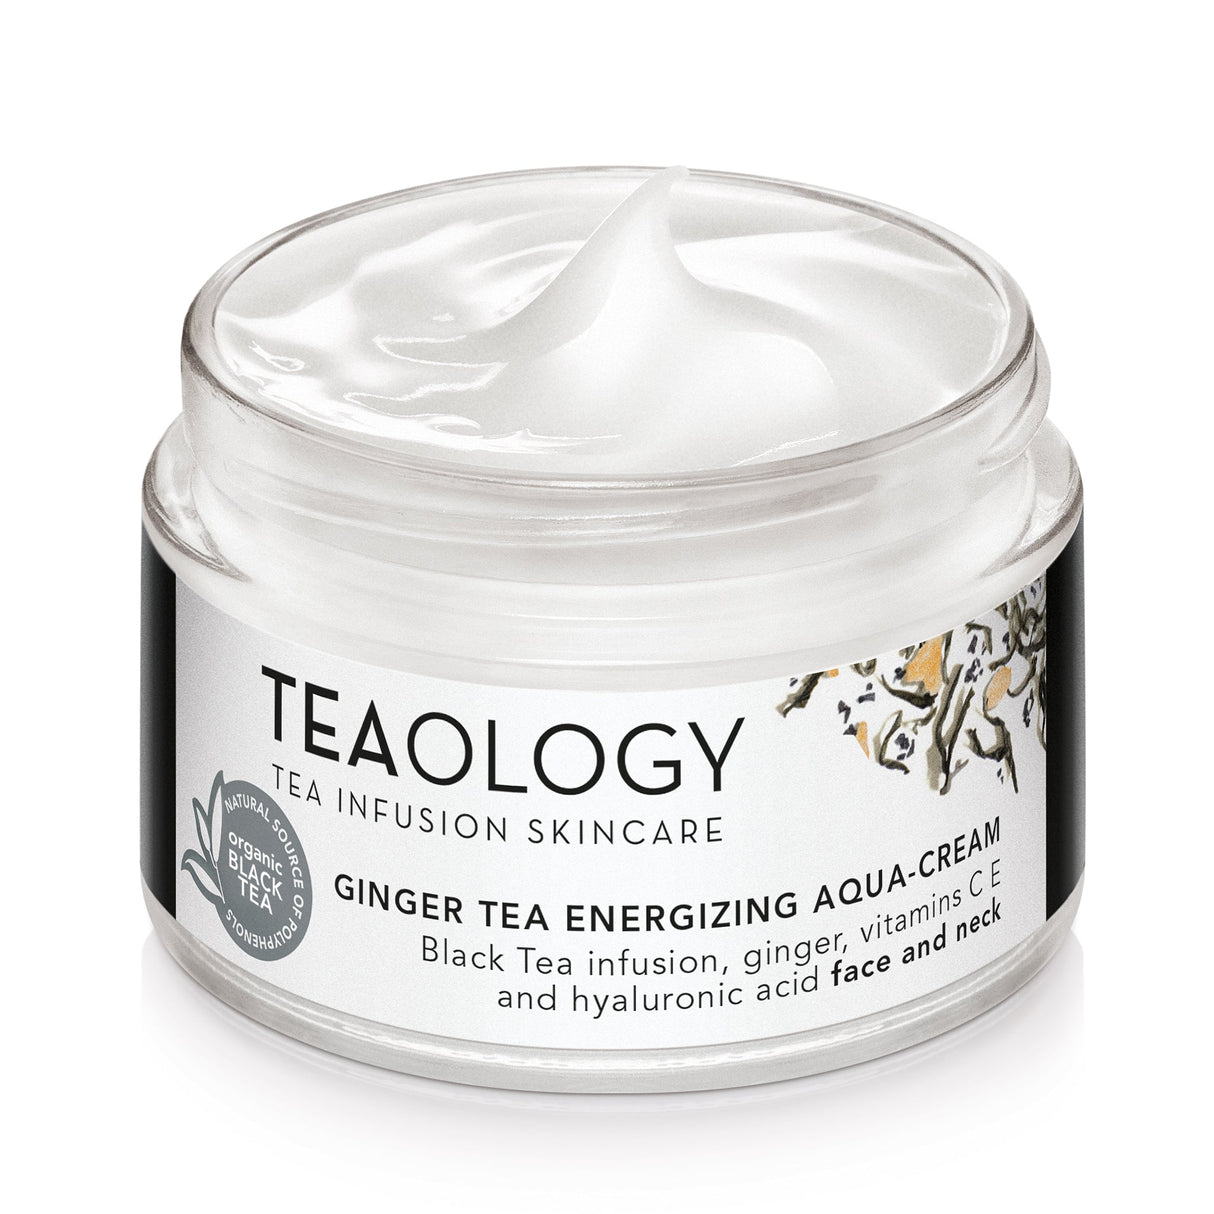 Ginger Tea Energizing Aqua-Cream-Teaology